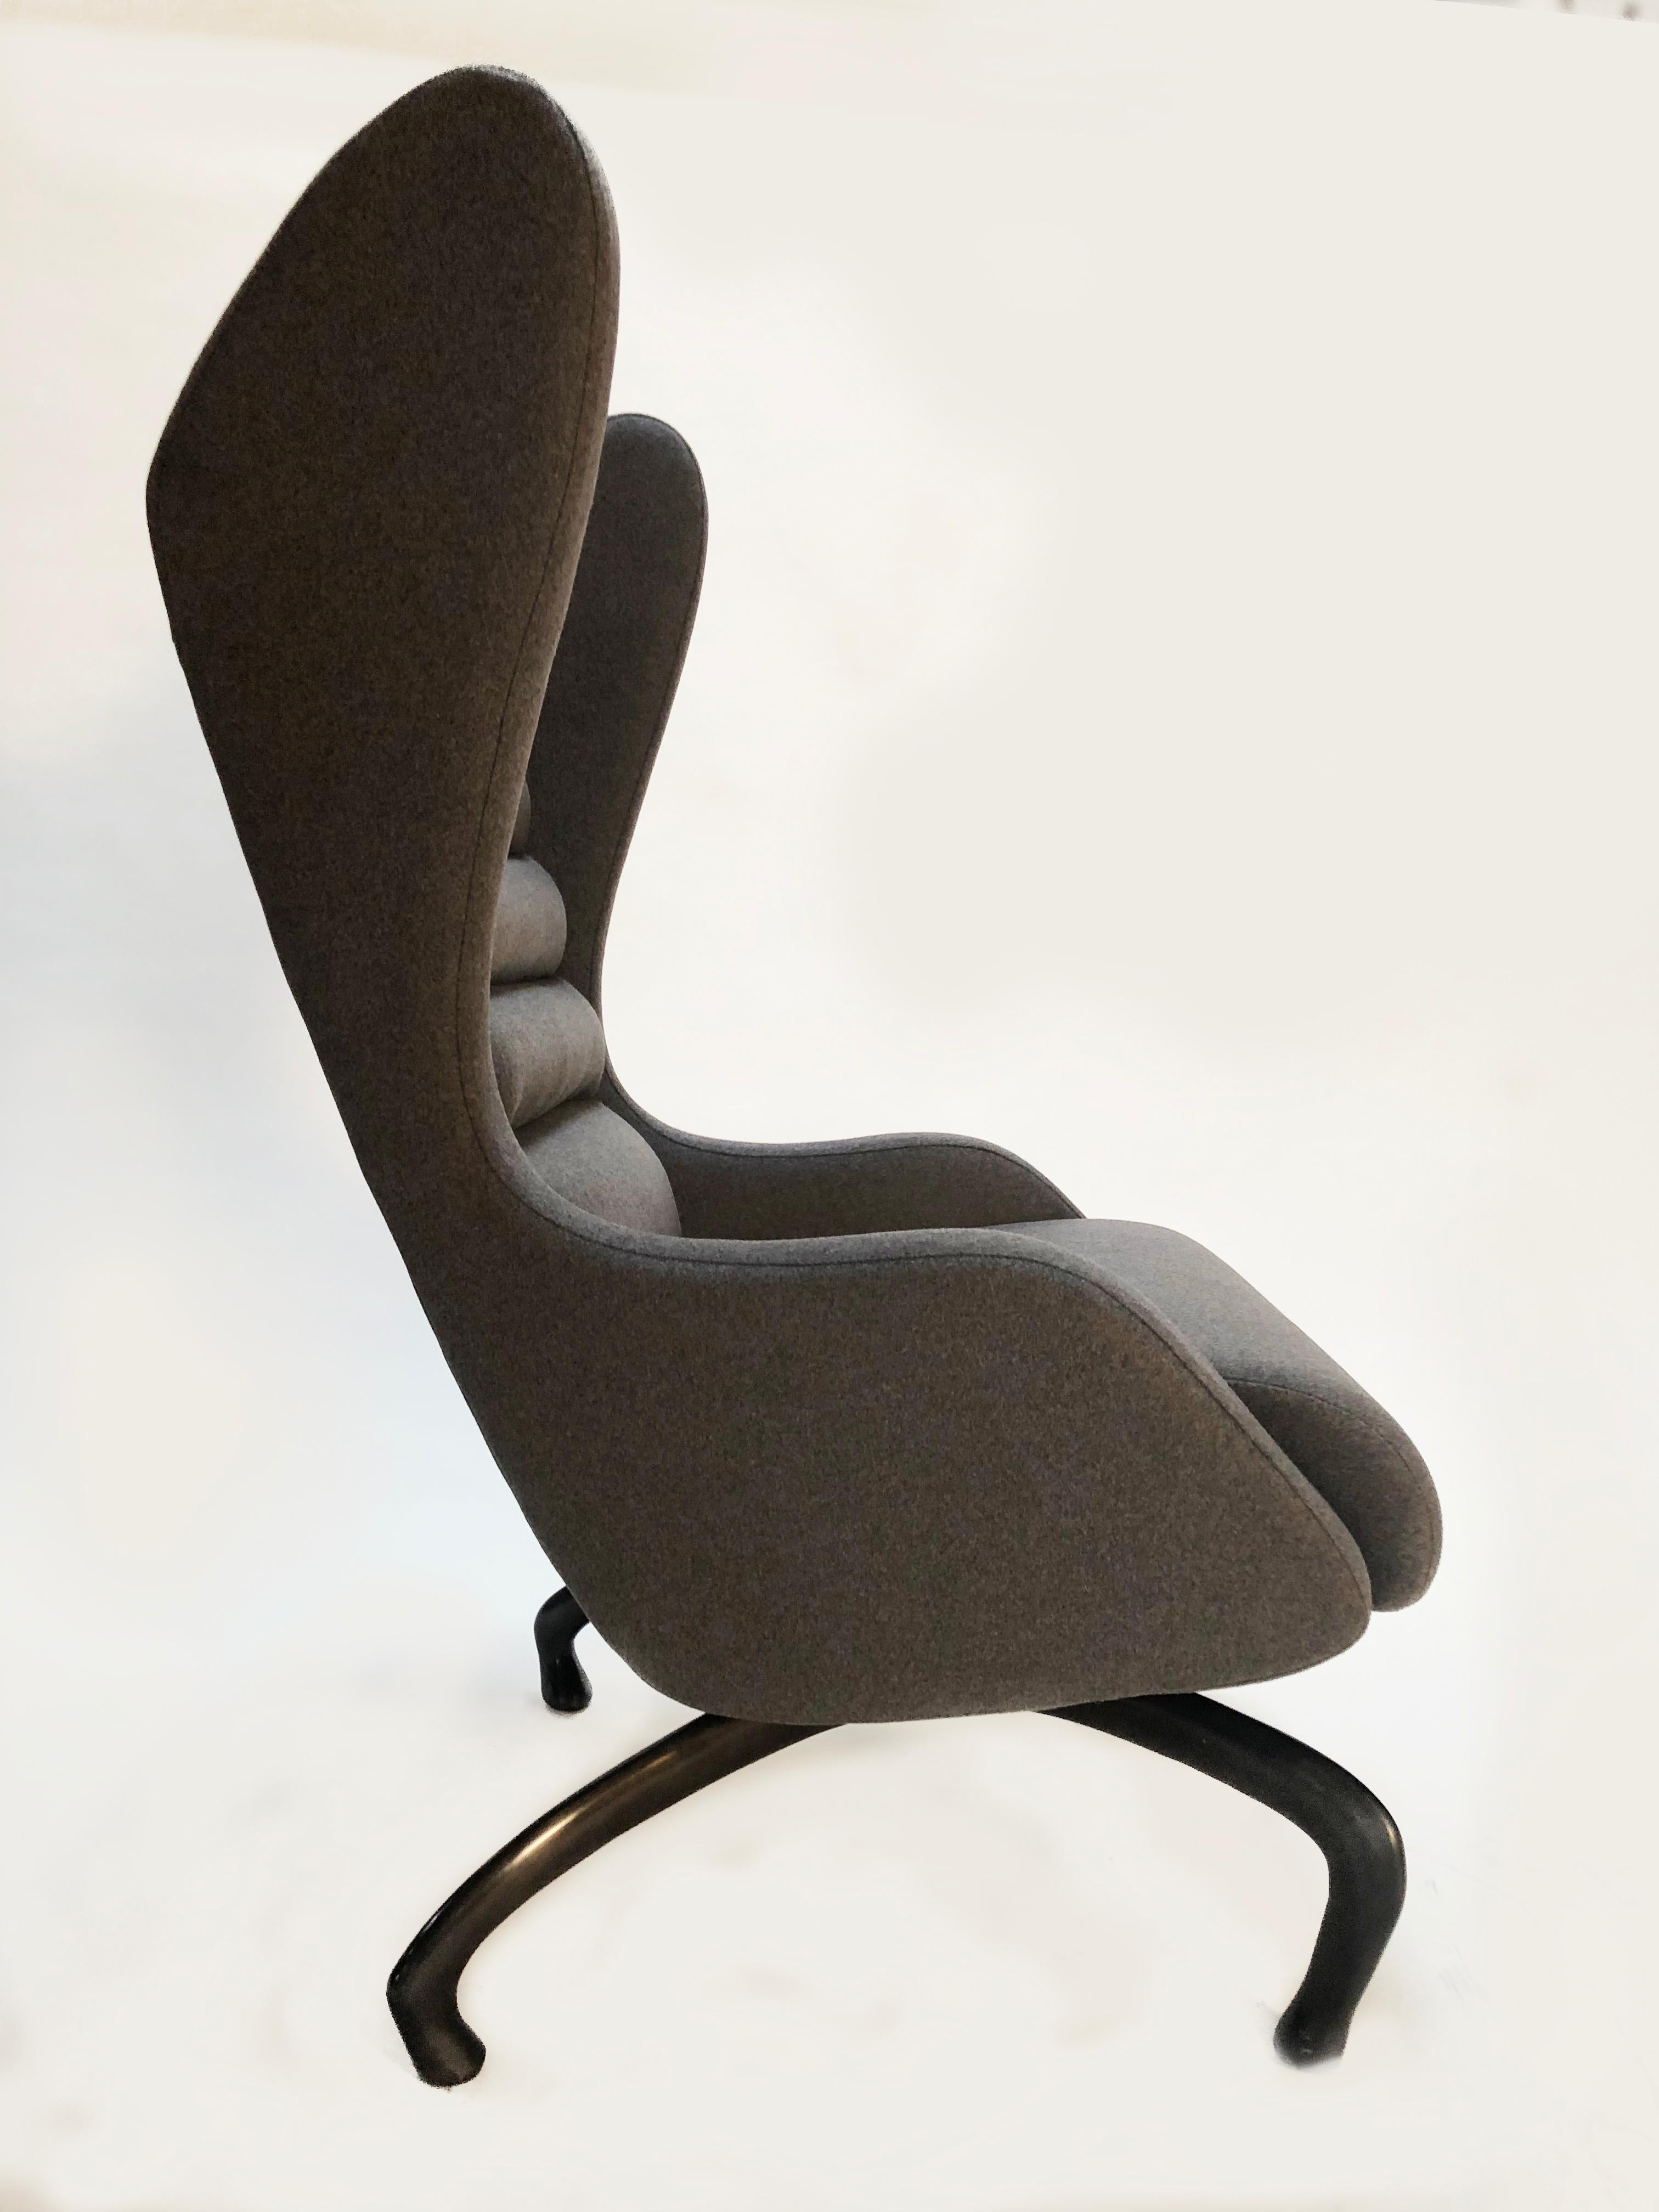 Cantering Lounge Chair, Leather / Cast Aluminium, Jordan Mozer, USA, 2003-2018 For Sale 11